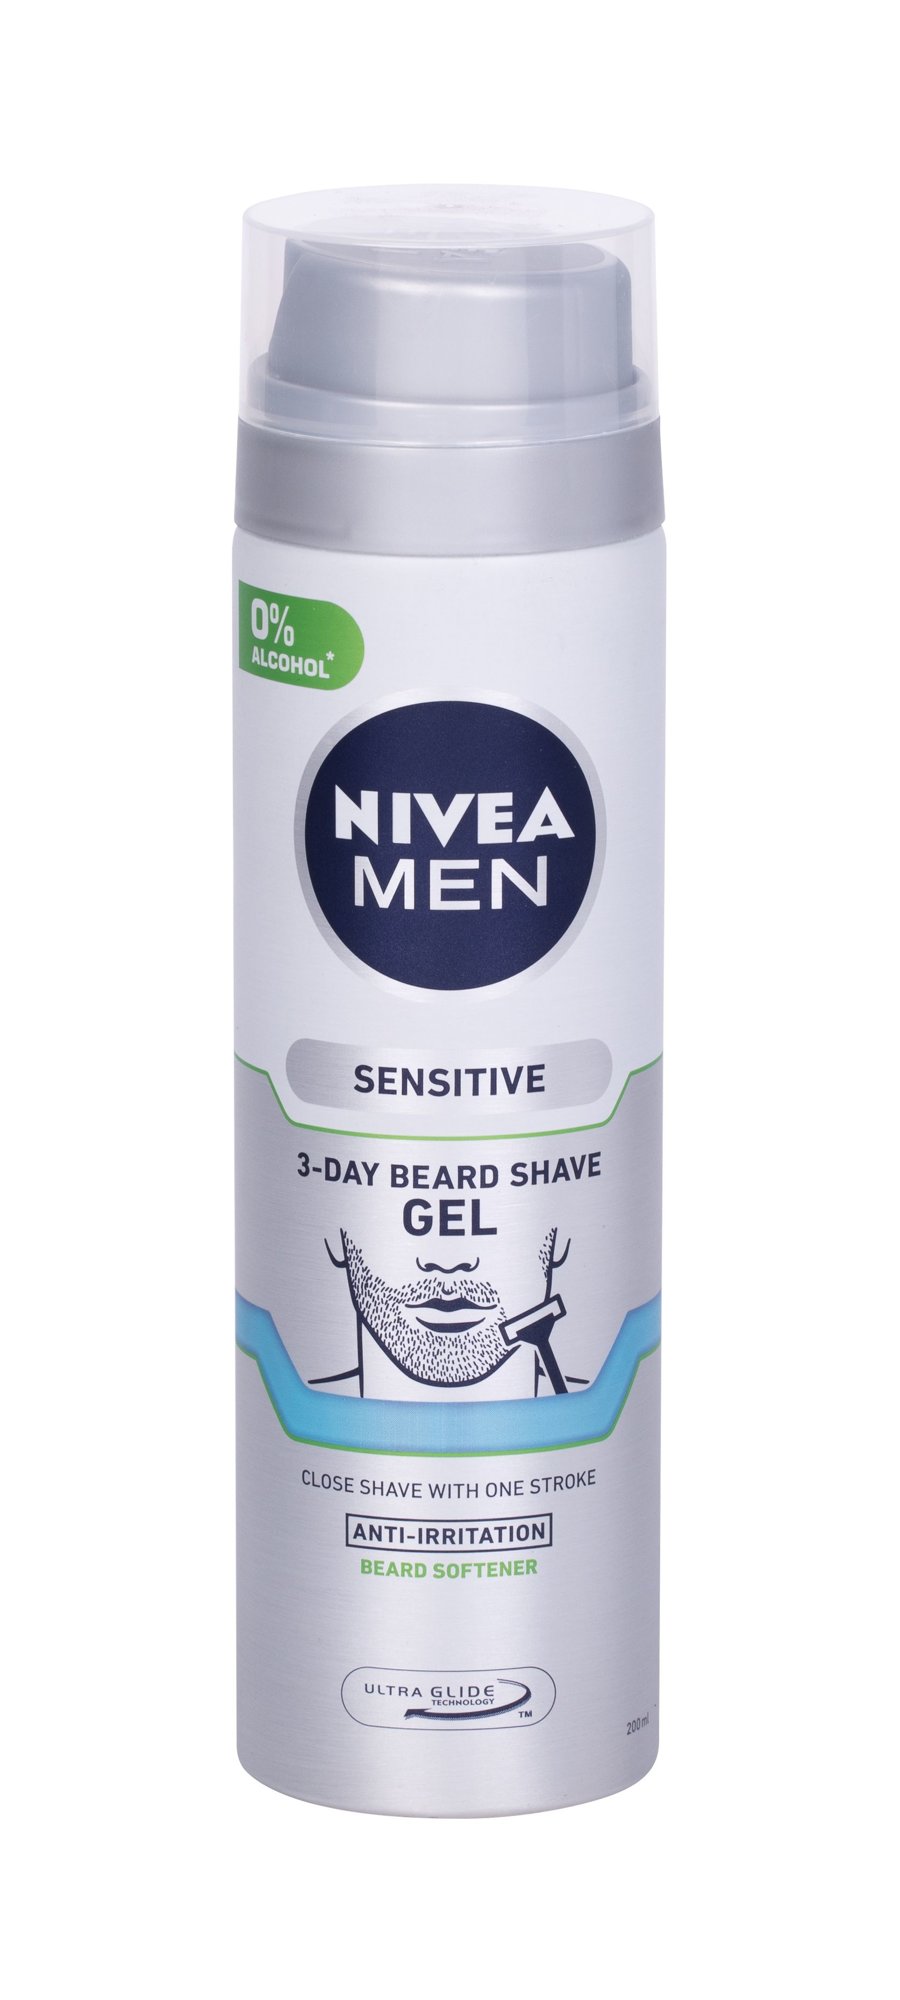 Nivea Men Sensitive 3-Day Beard skutimosi gelis